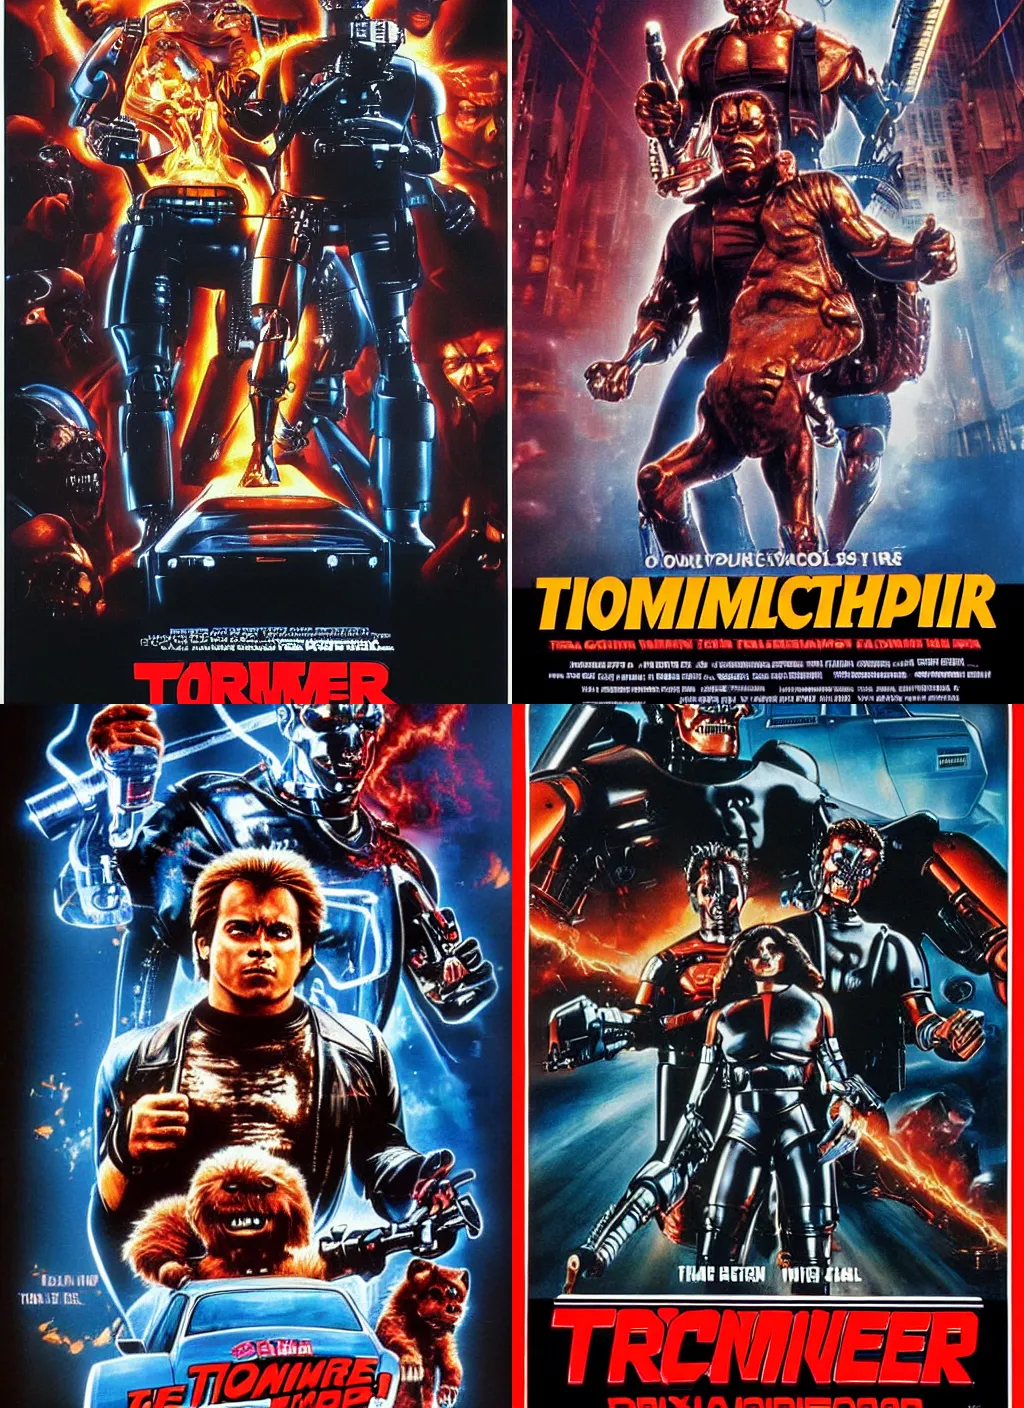 Prompt: Movie poster for Terminator Ruxpin (1985)